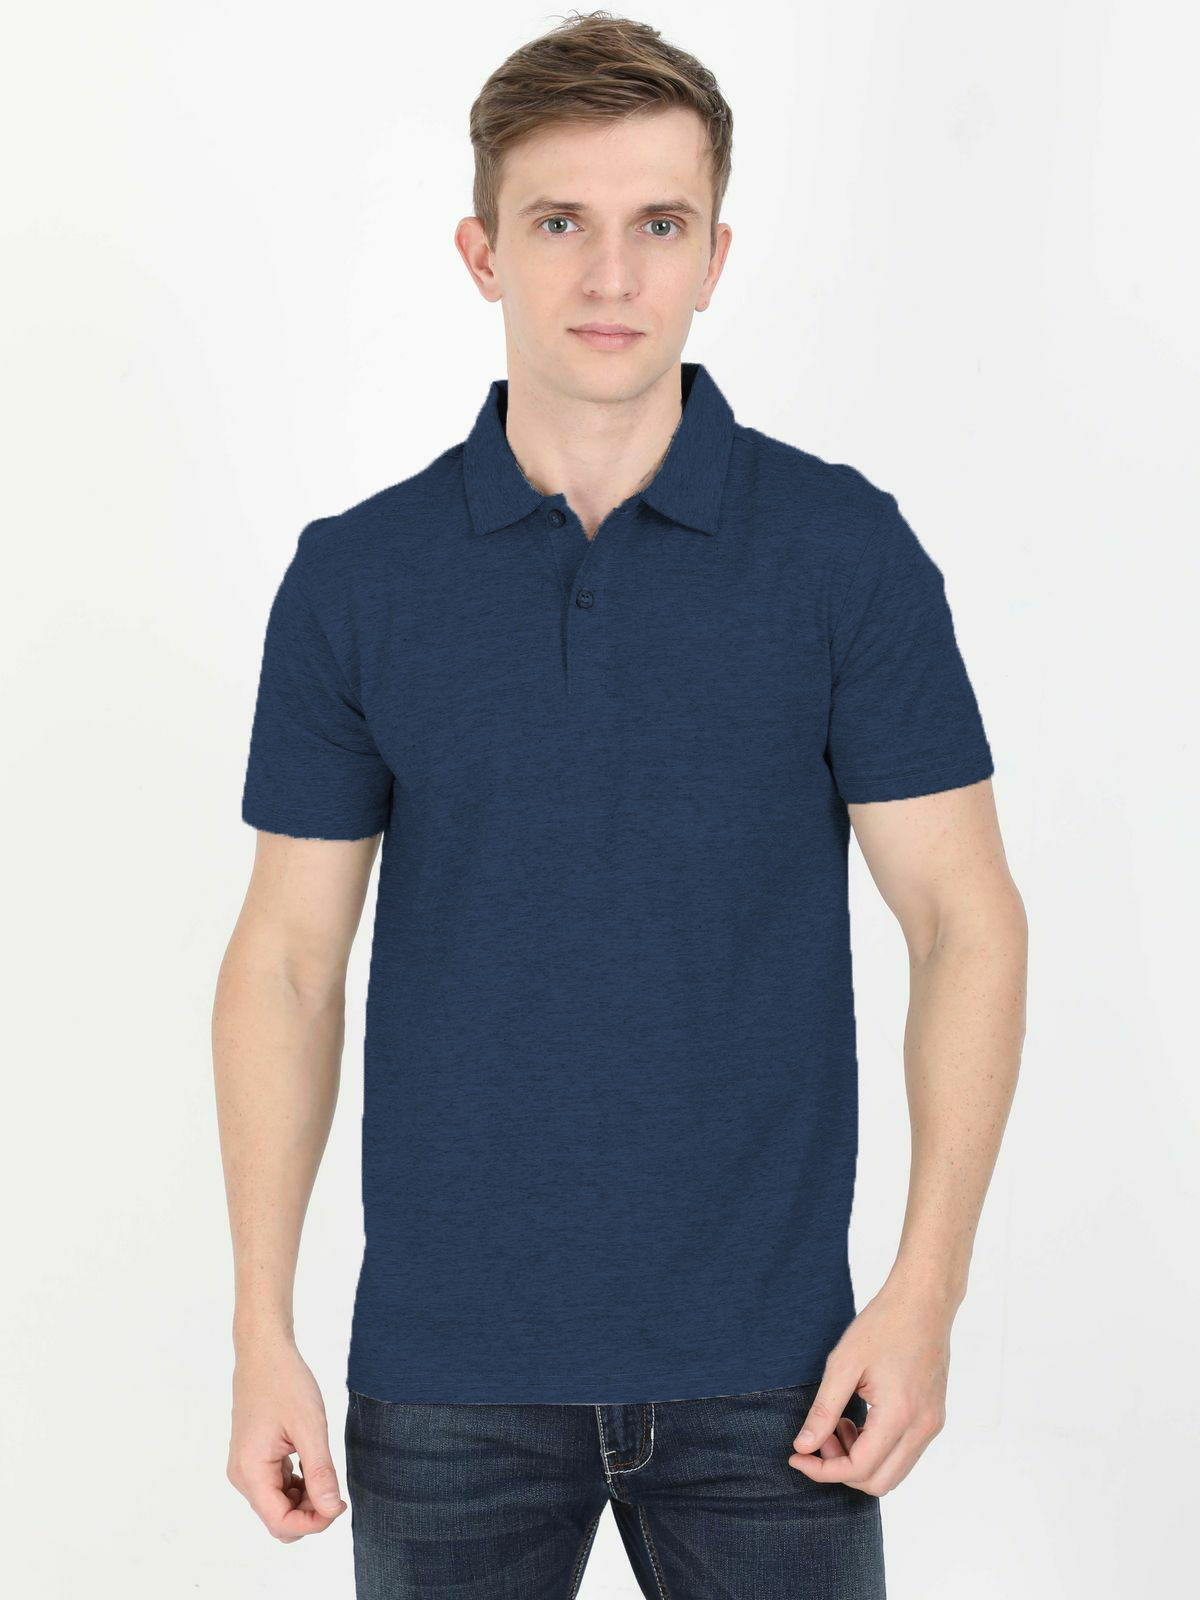 Navy Plain Polo Shirt for Men - Front